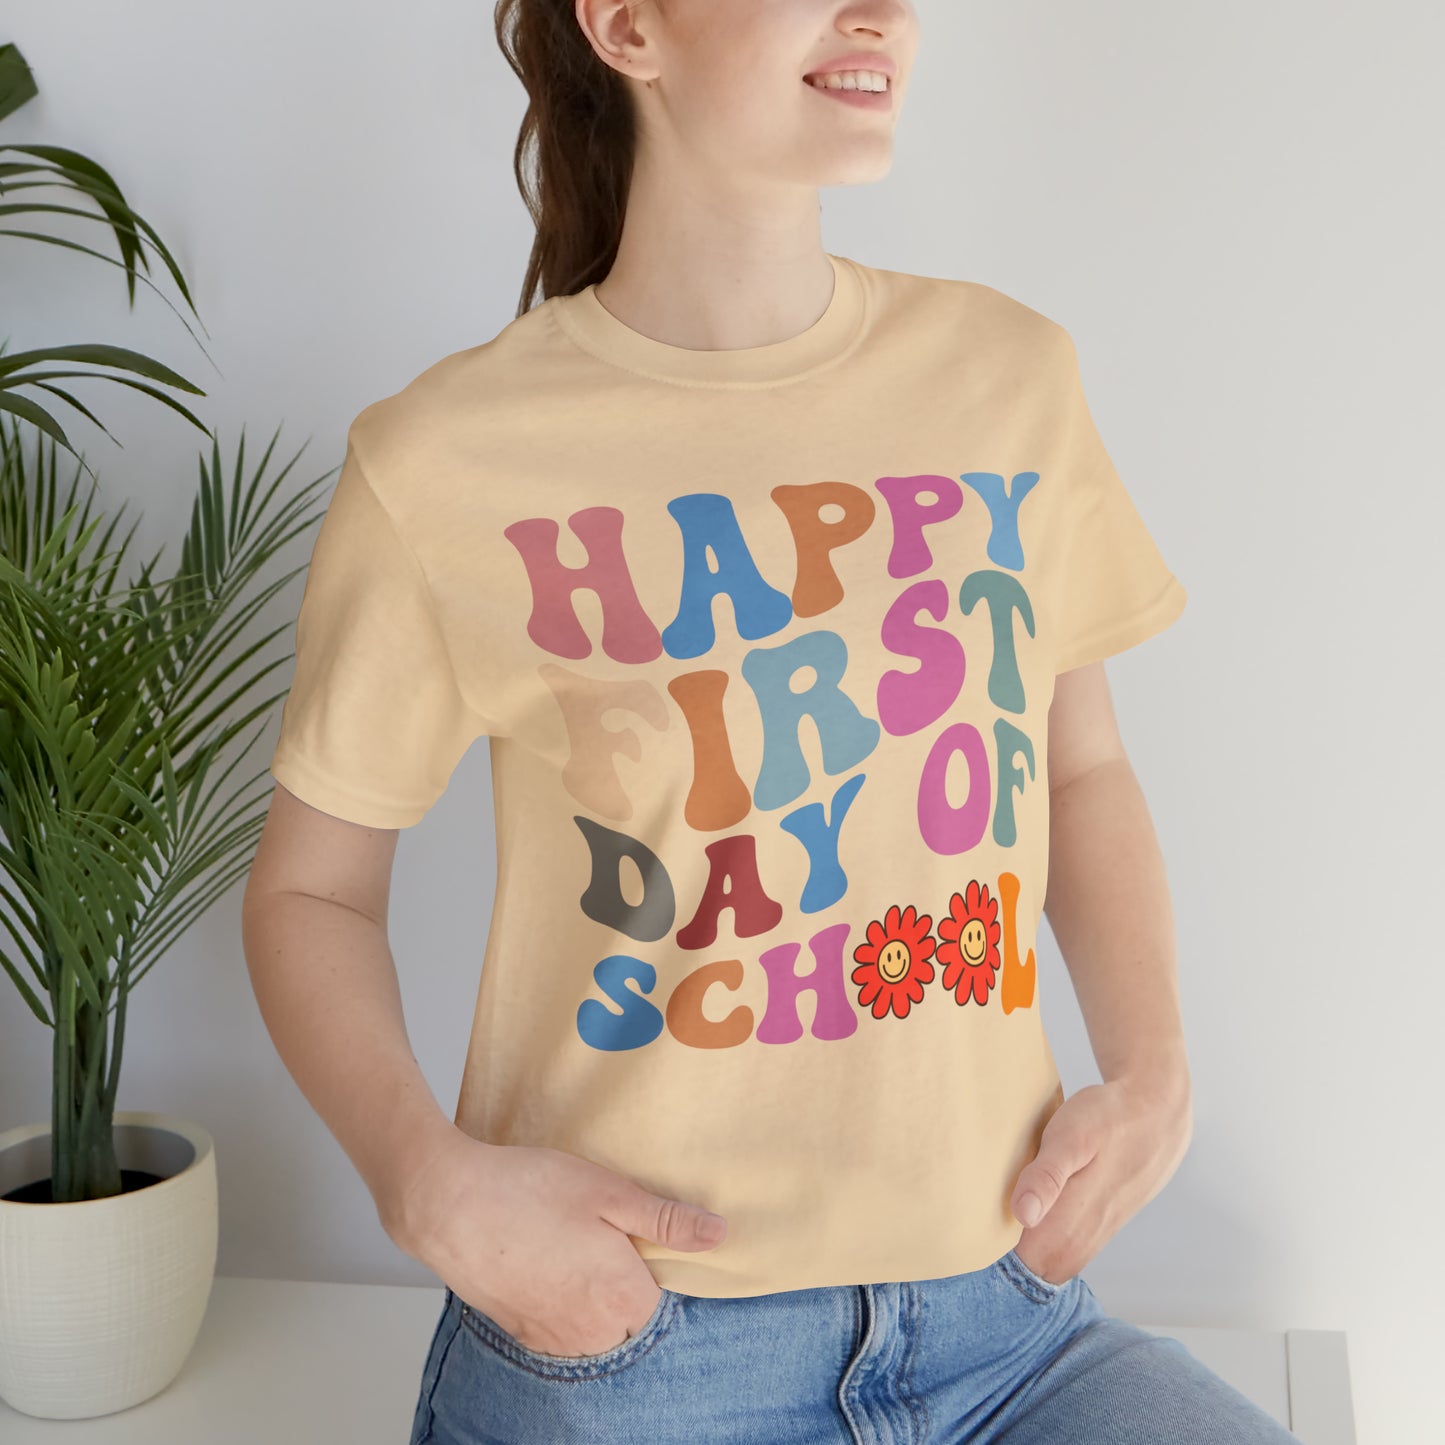 First Day of Class Shirt, Happy First Day Of School Shirt, Back To School Shirt, Retro Teacher Shirt, T502